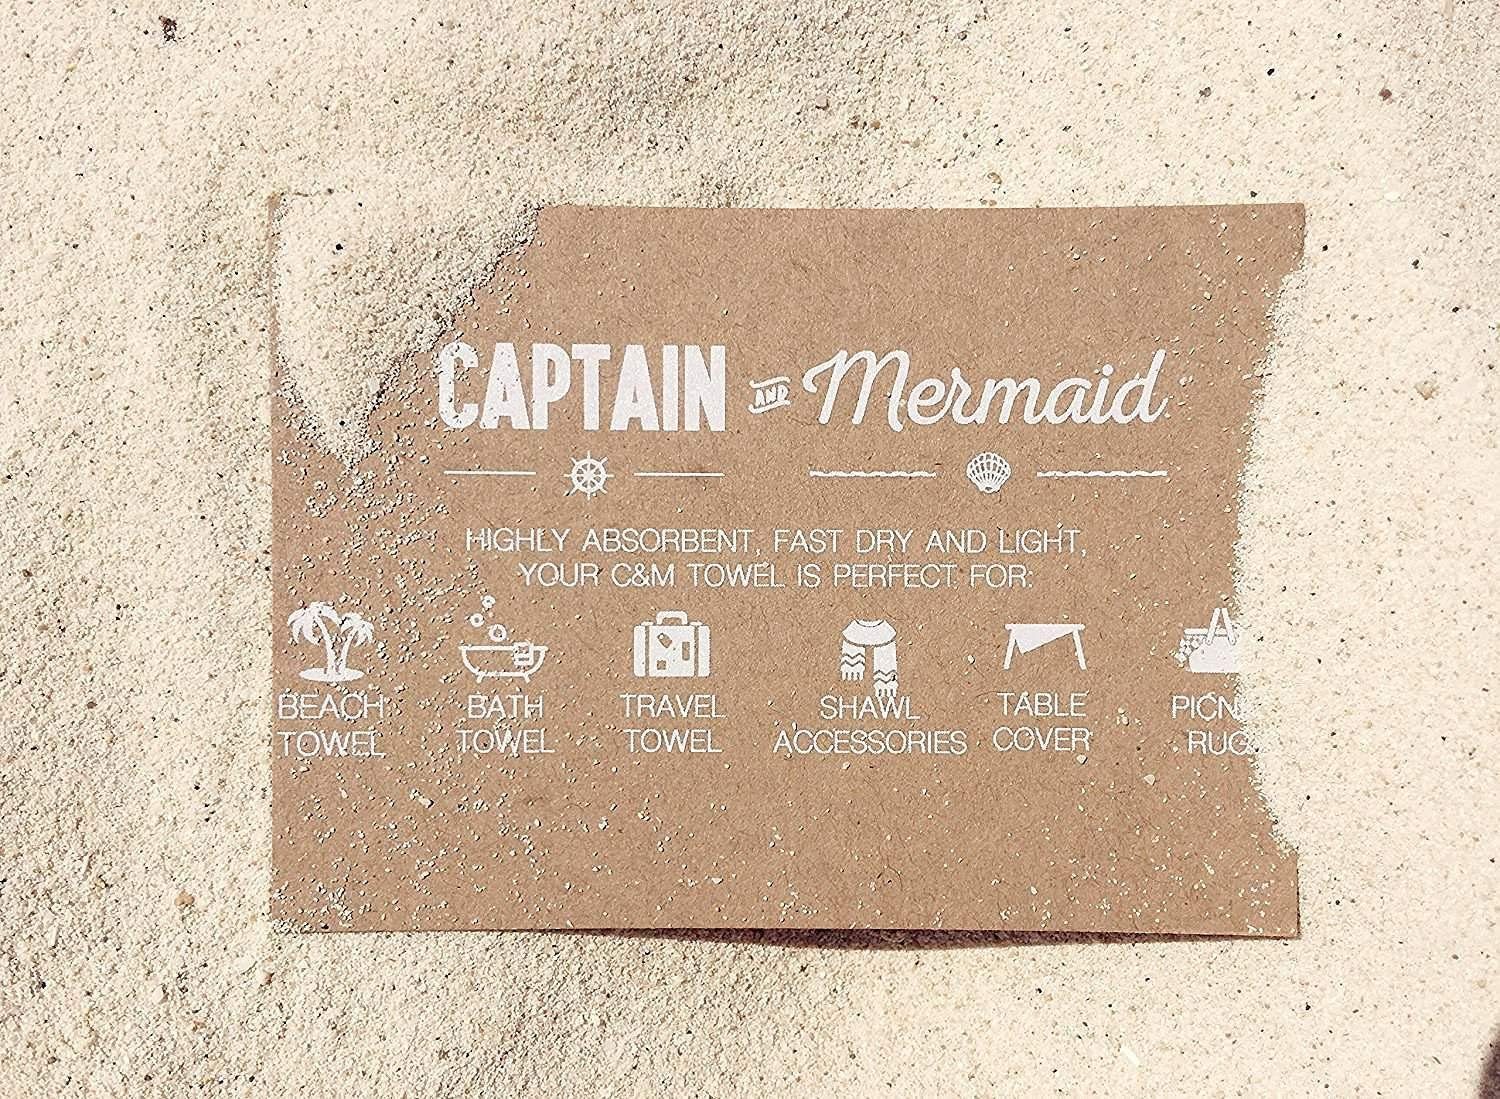 and Mermaid Captain&Mermaid 100% aus Strandtuch Baumwolle, Baumwolle Premium 100% Strandtuch CAPTAIN Botanical